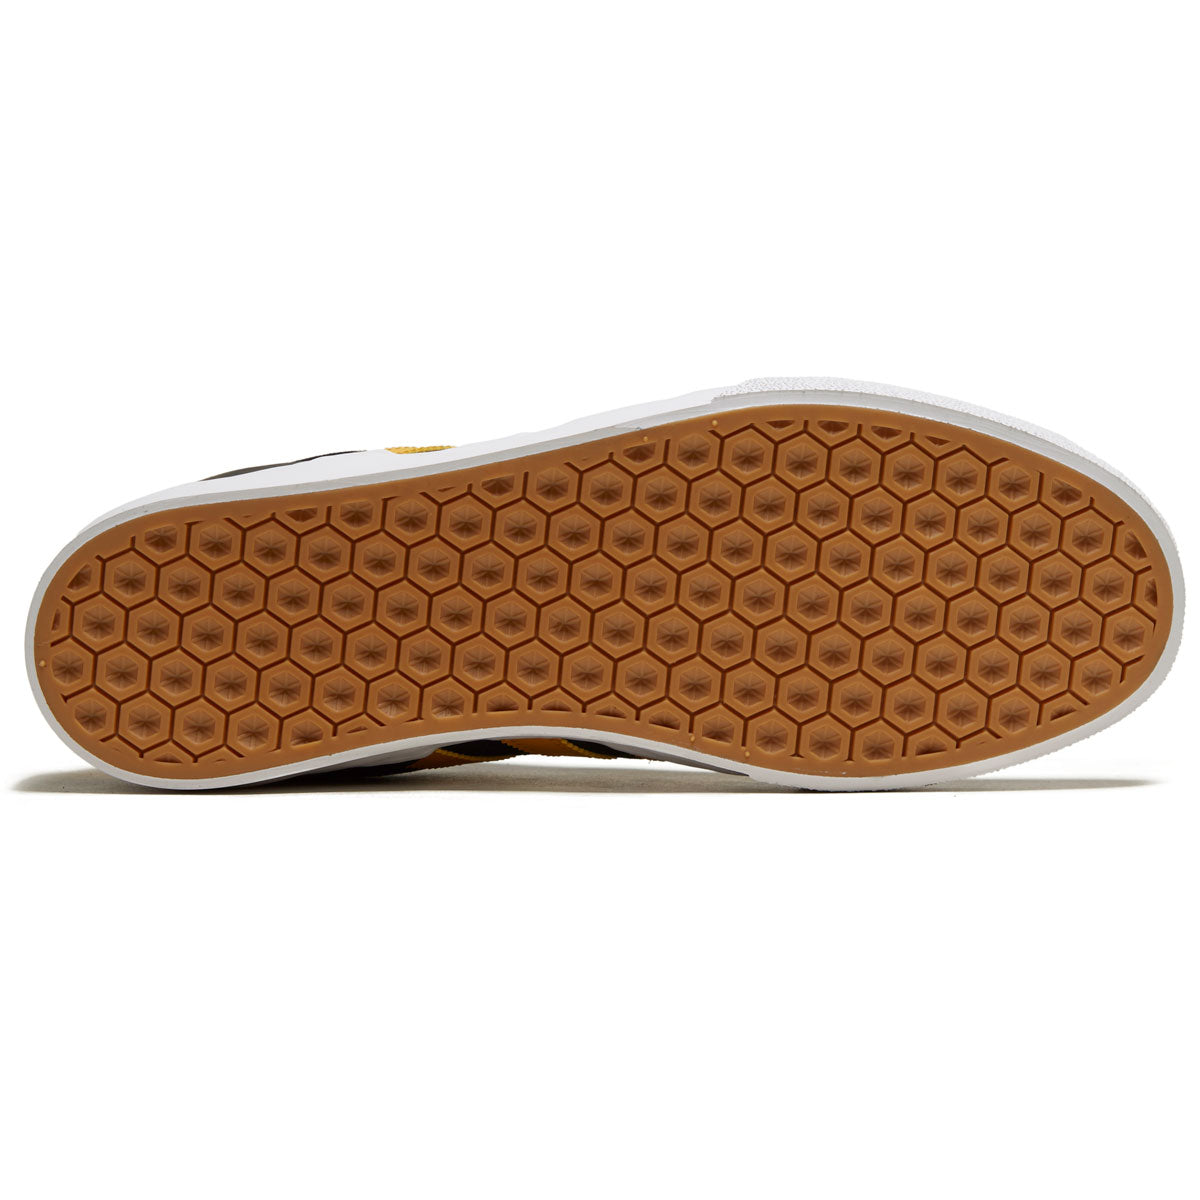 Adidas Busenitz Vulc II Shoes - Core Black/Preloved Yellow/White image 4